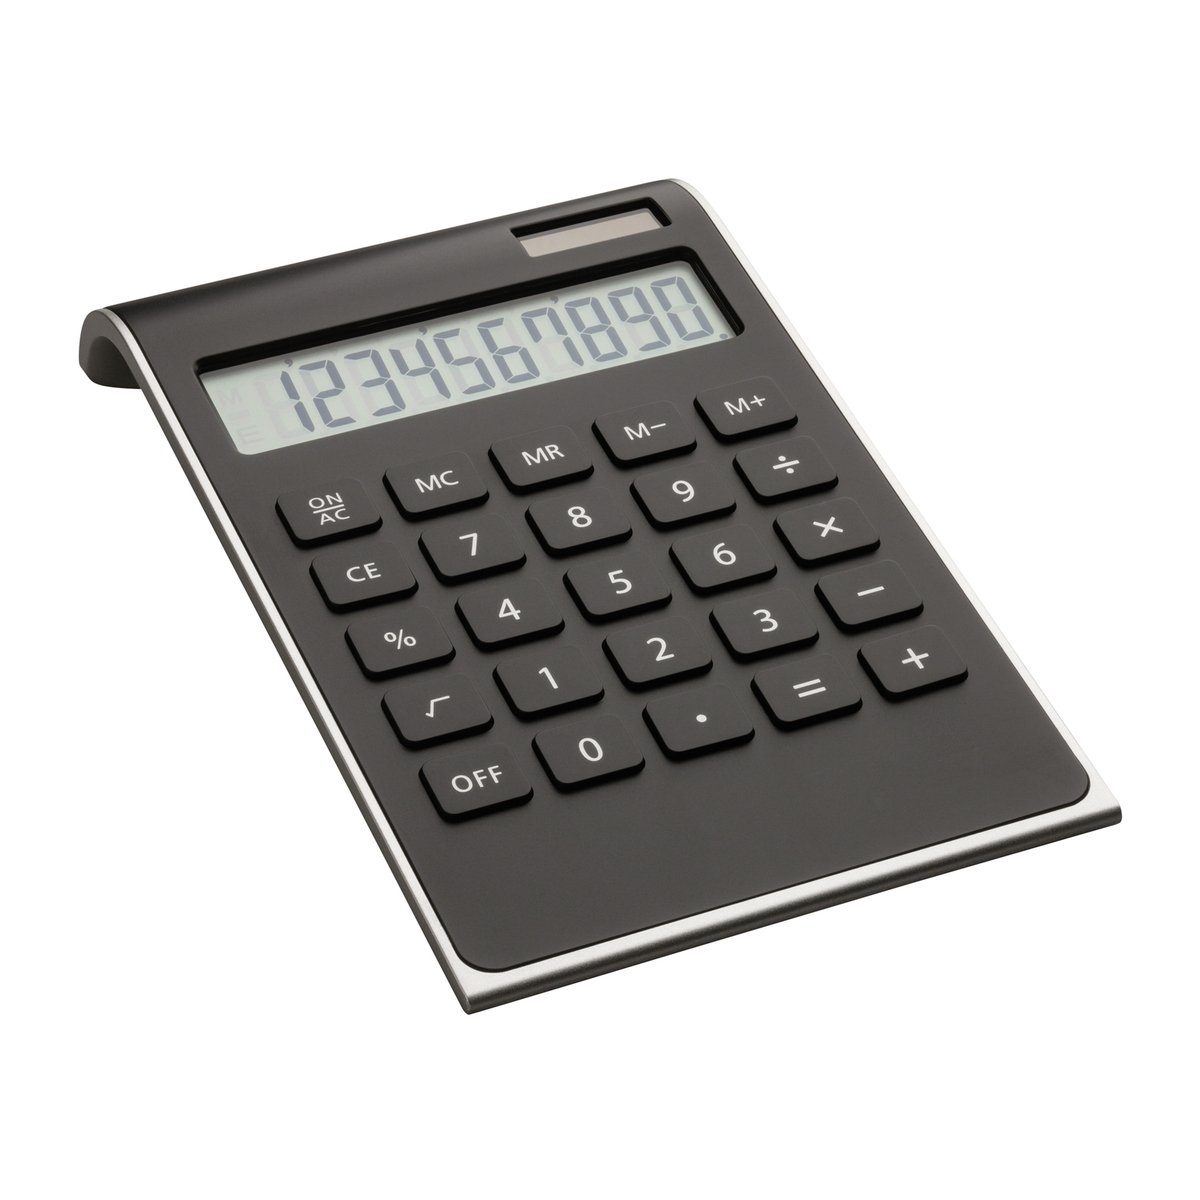 Solar calculator REEVES-VALINDA black/silver